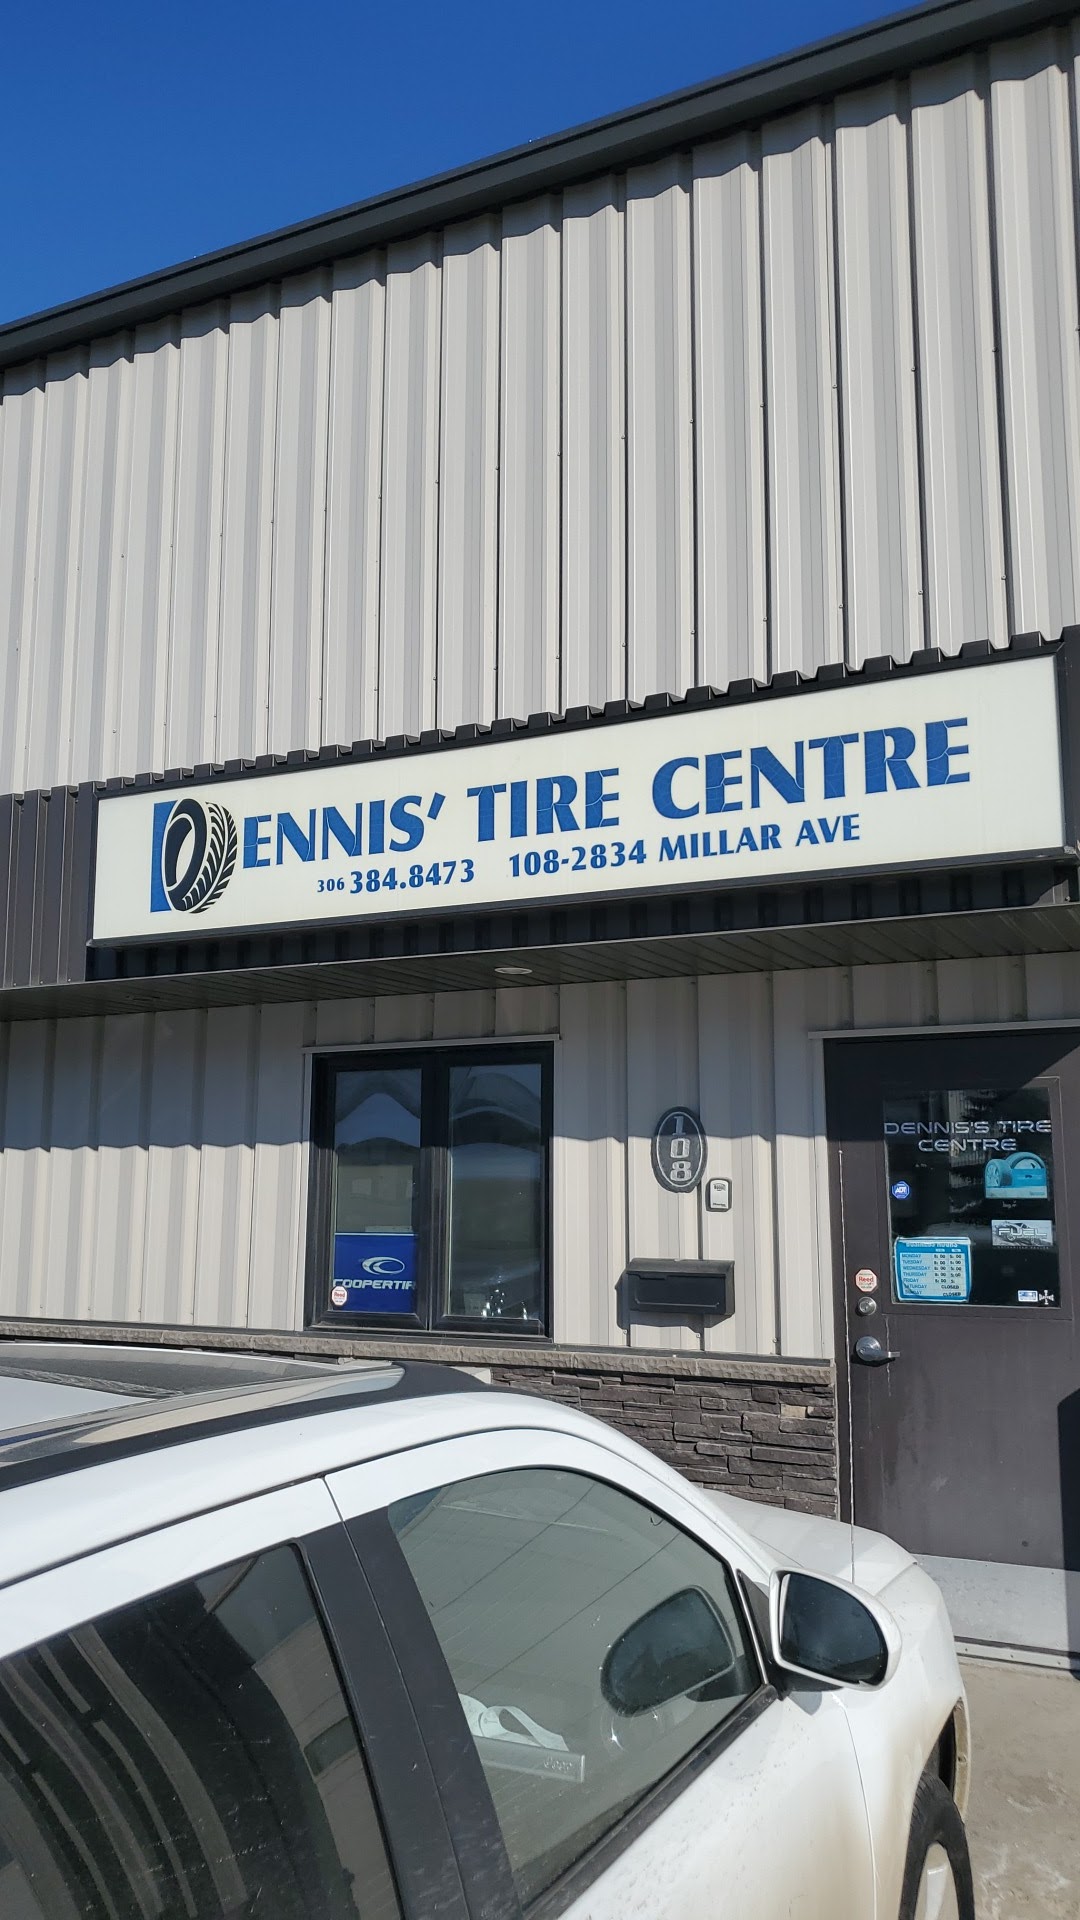 Dennis' Tire Centre